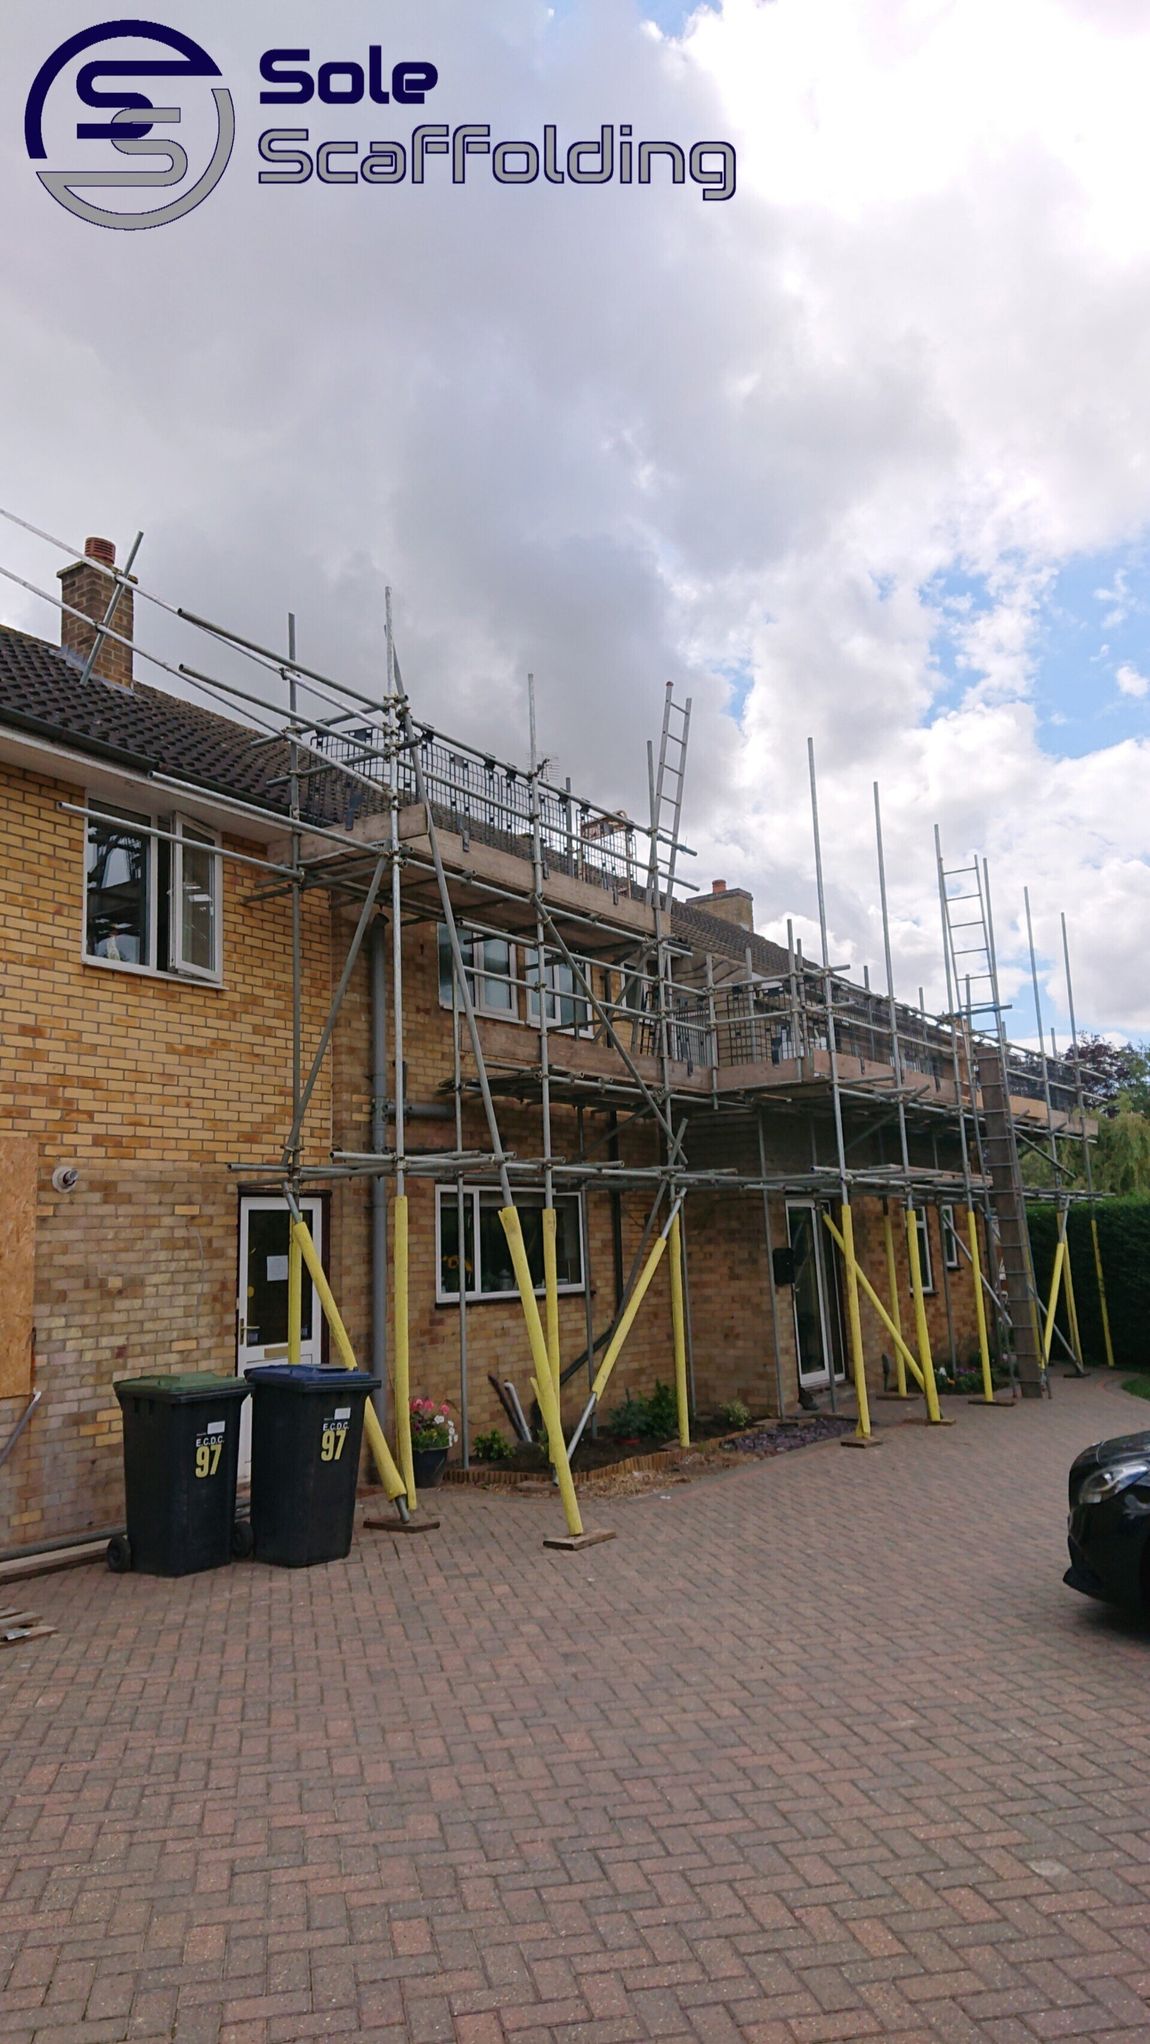 sole scaffolding - scaffold for dormer window installation in Ely